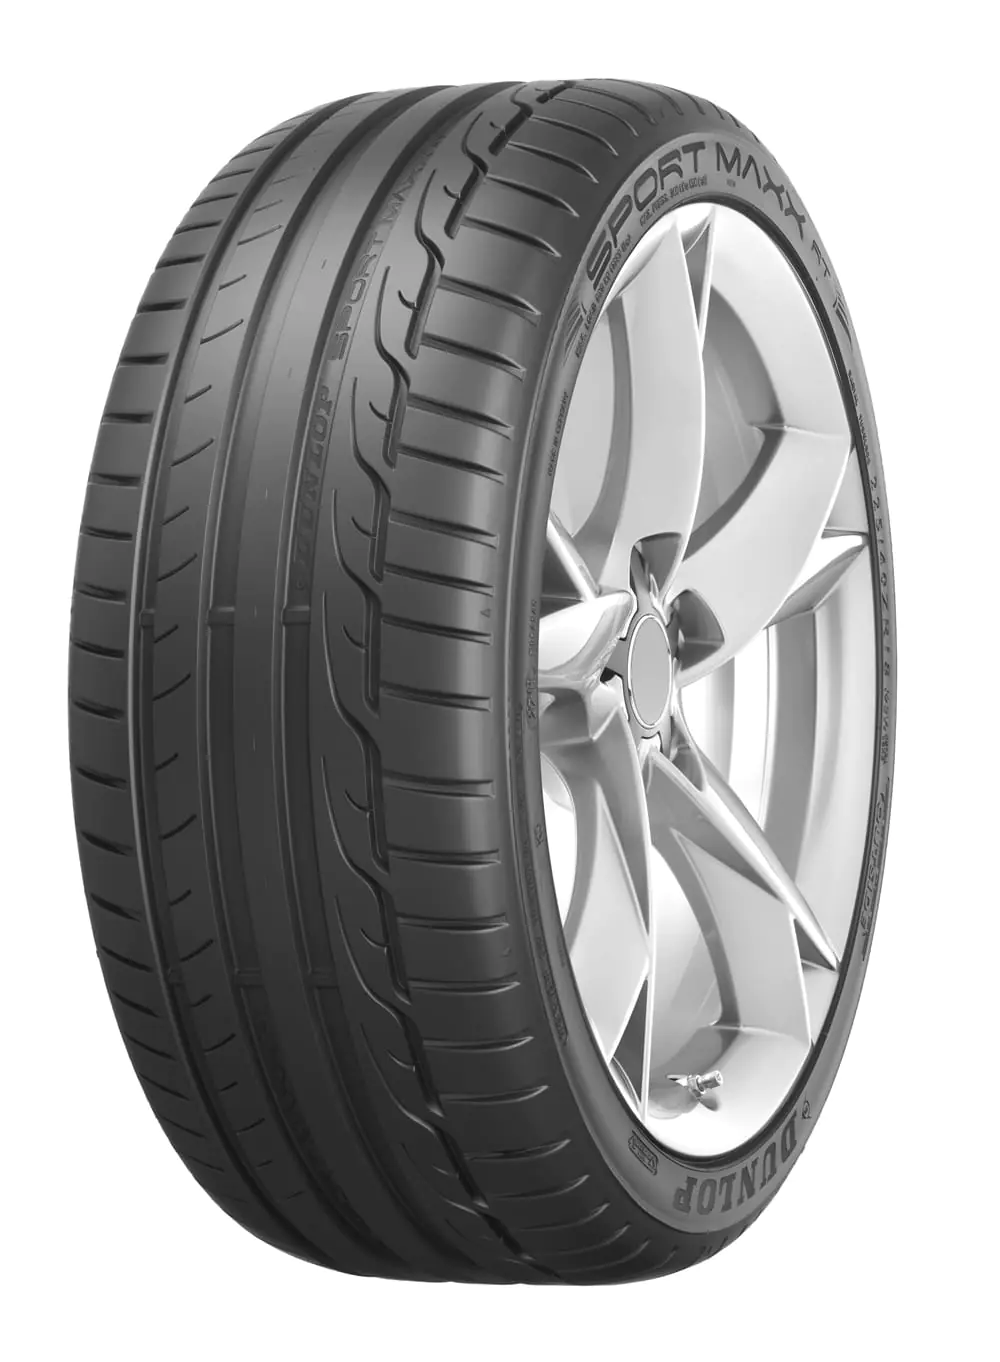 Dunlop Dunlop 225/55 R16 95Y SP.MAXX RT MFS pneumatici nuovi Estivo 